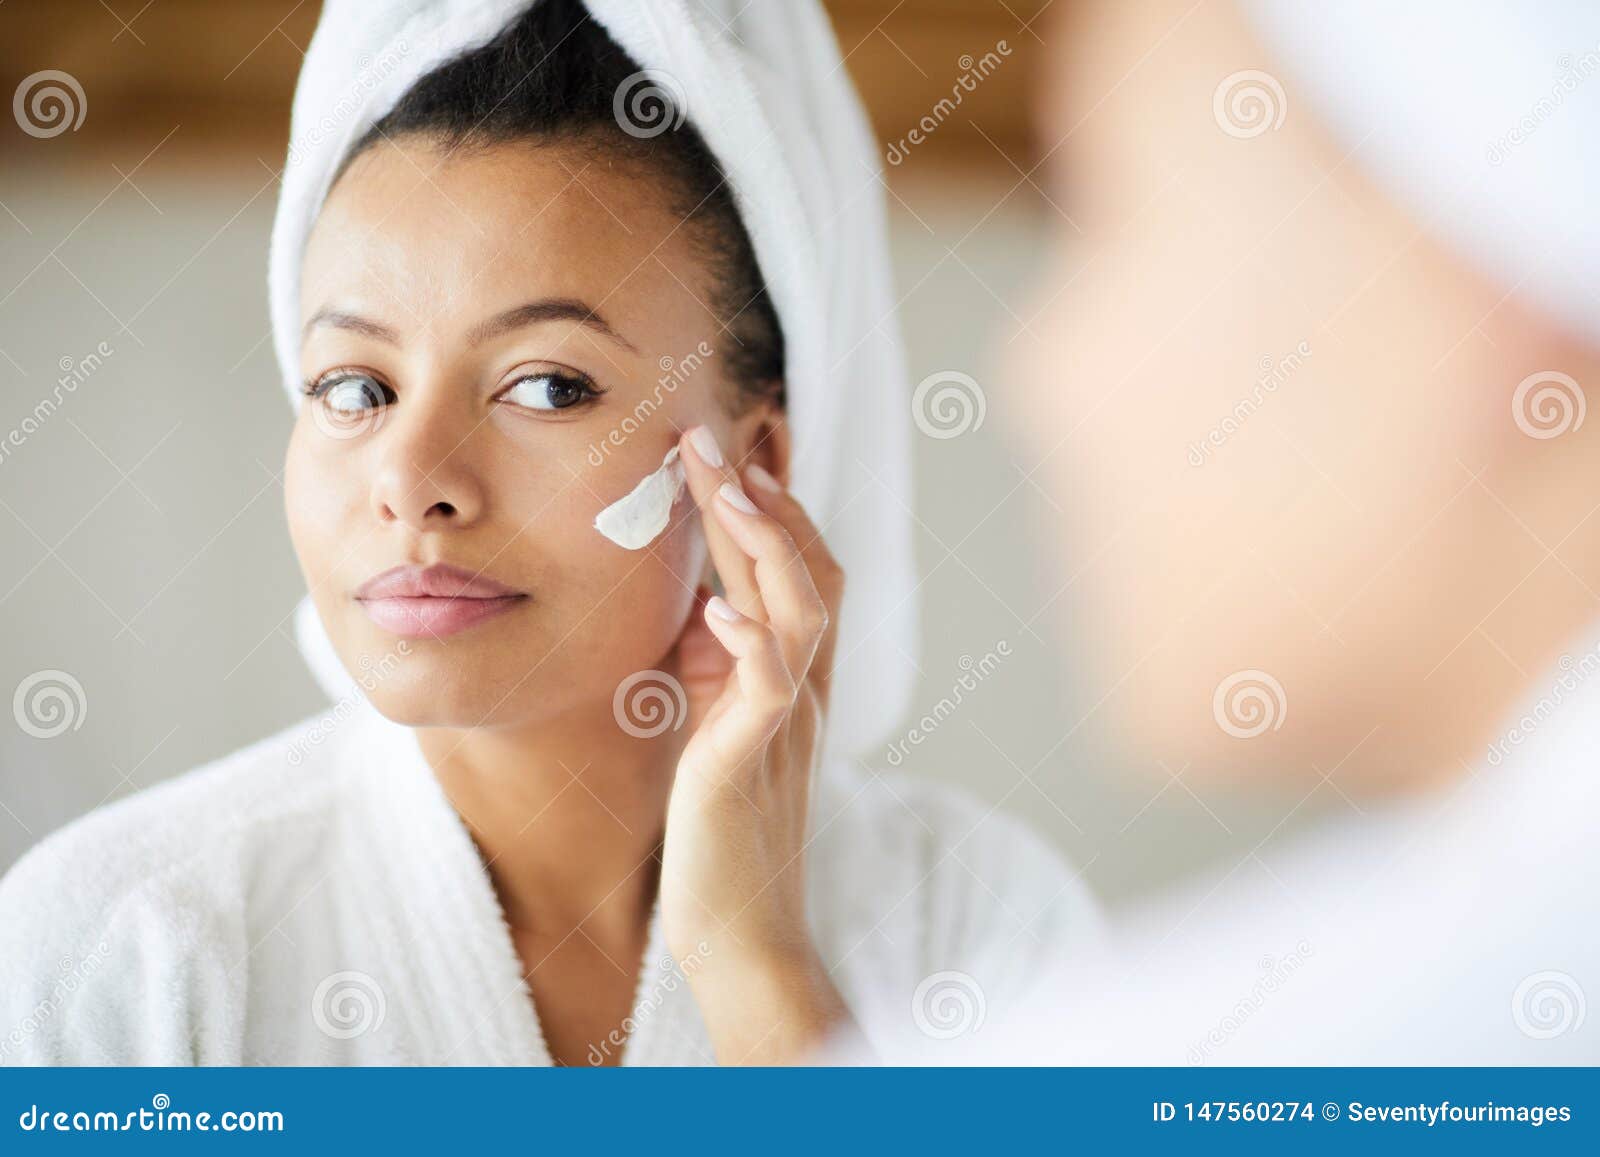 mixed race woman applying face cream